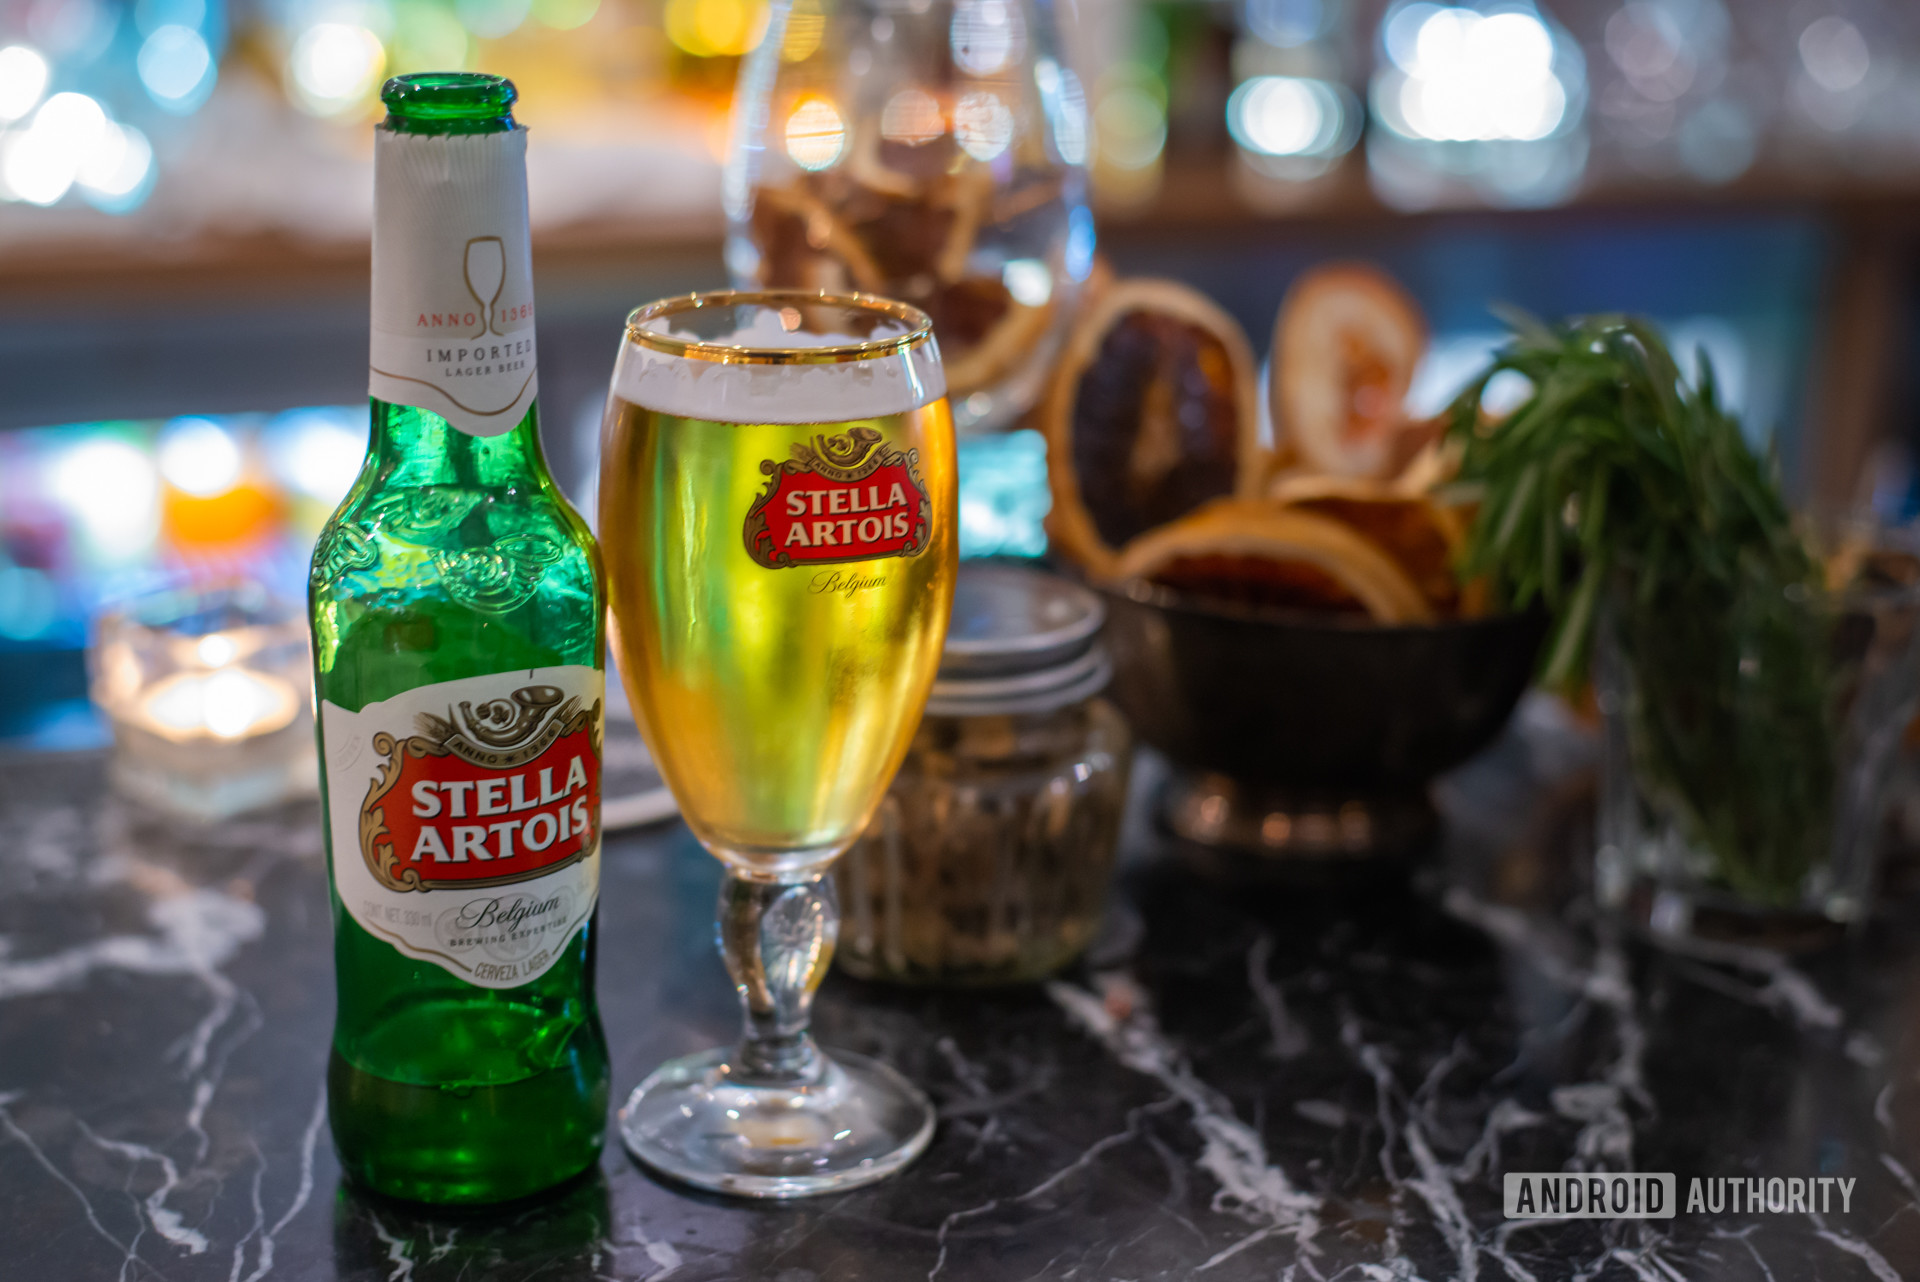 Stella Artois散景样本拍摄